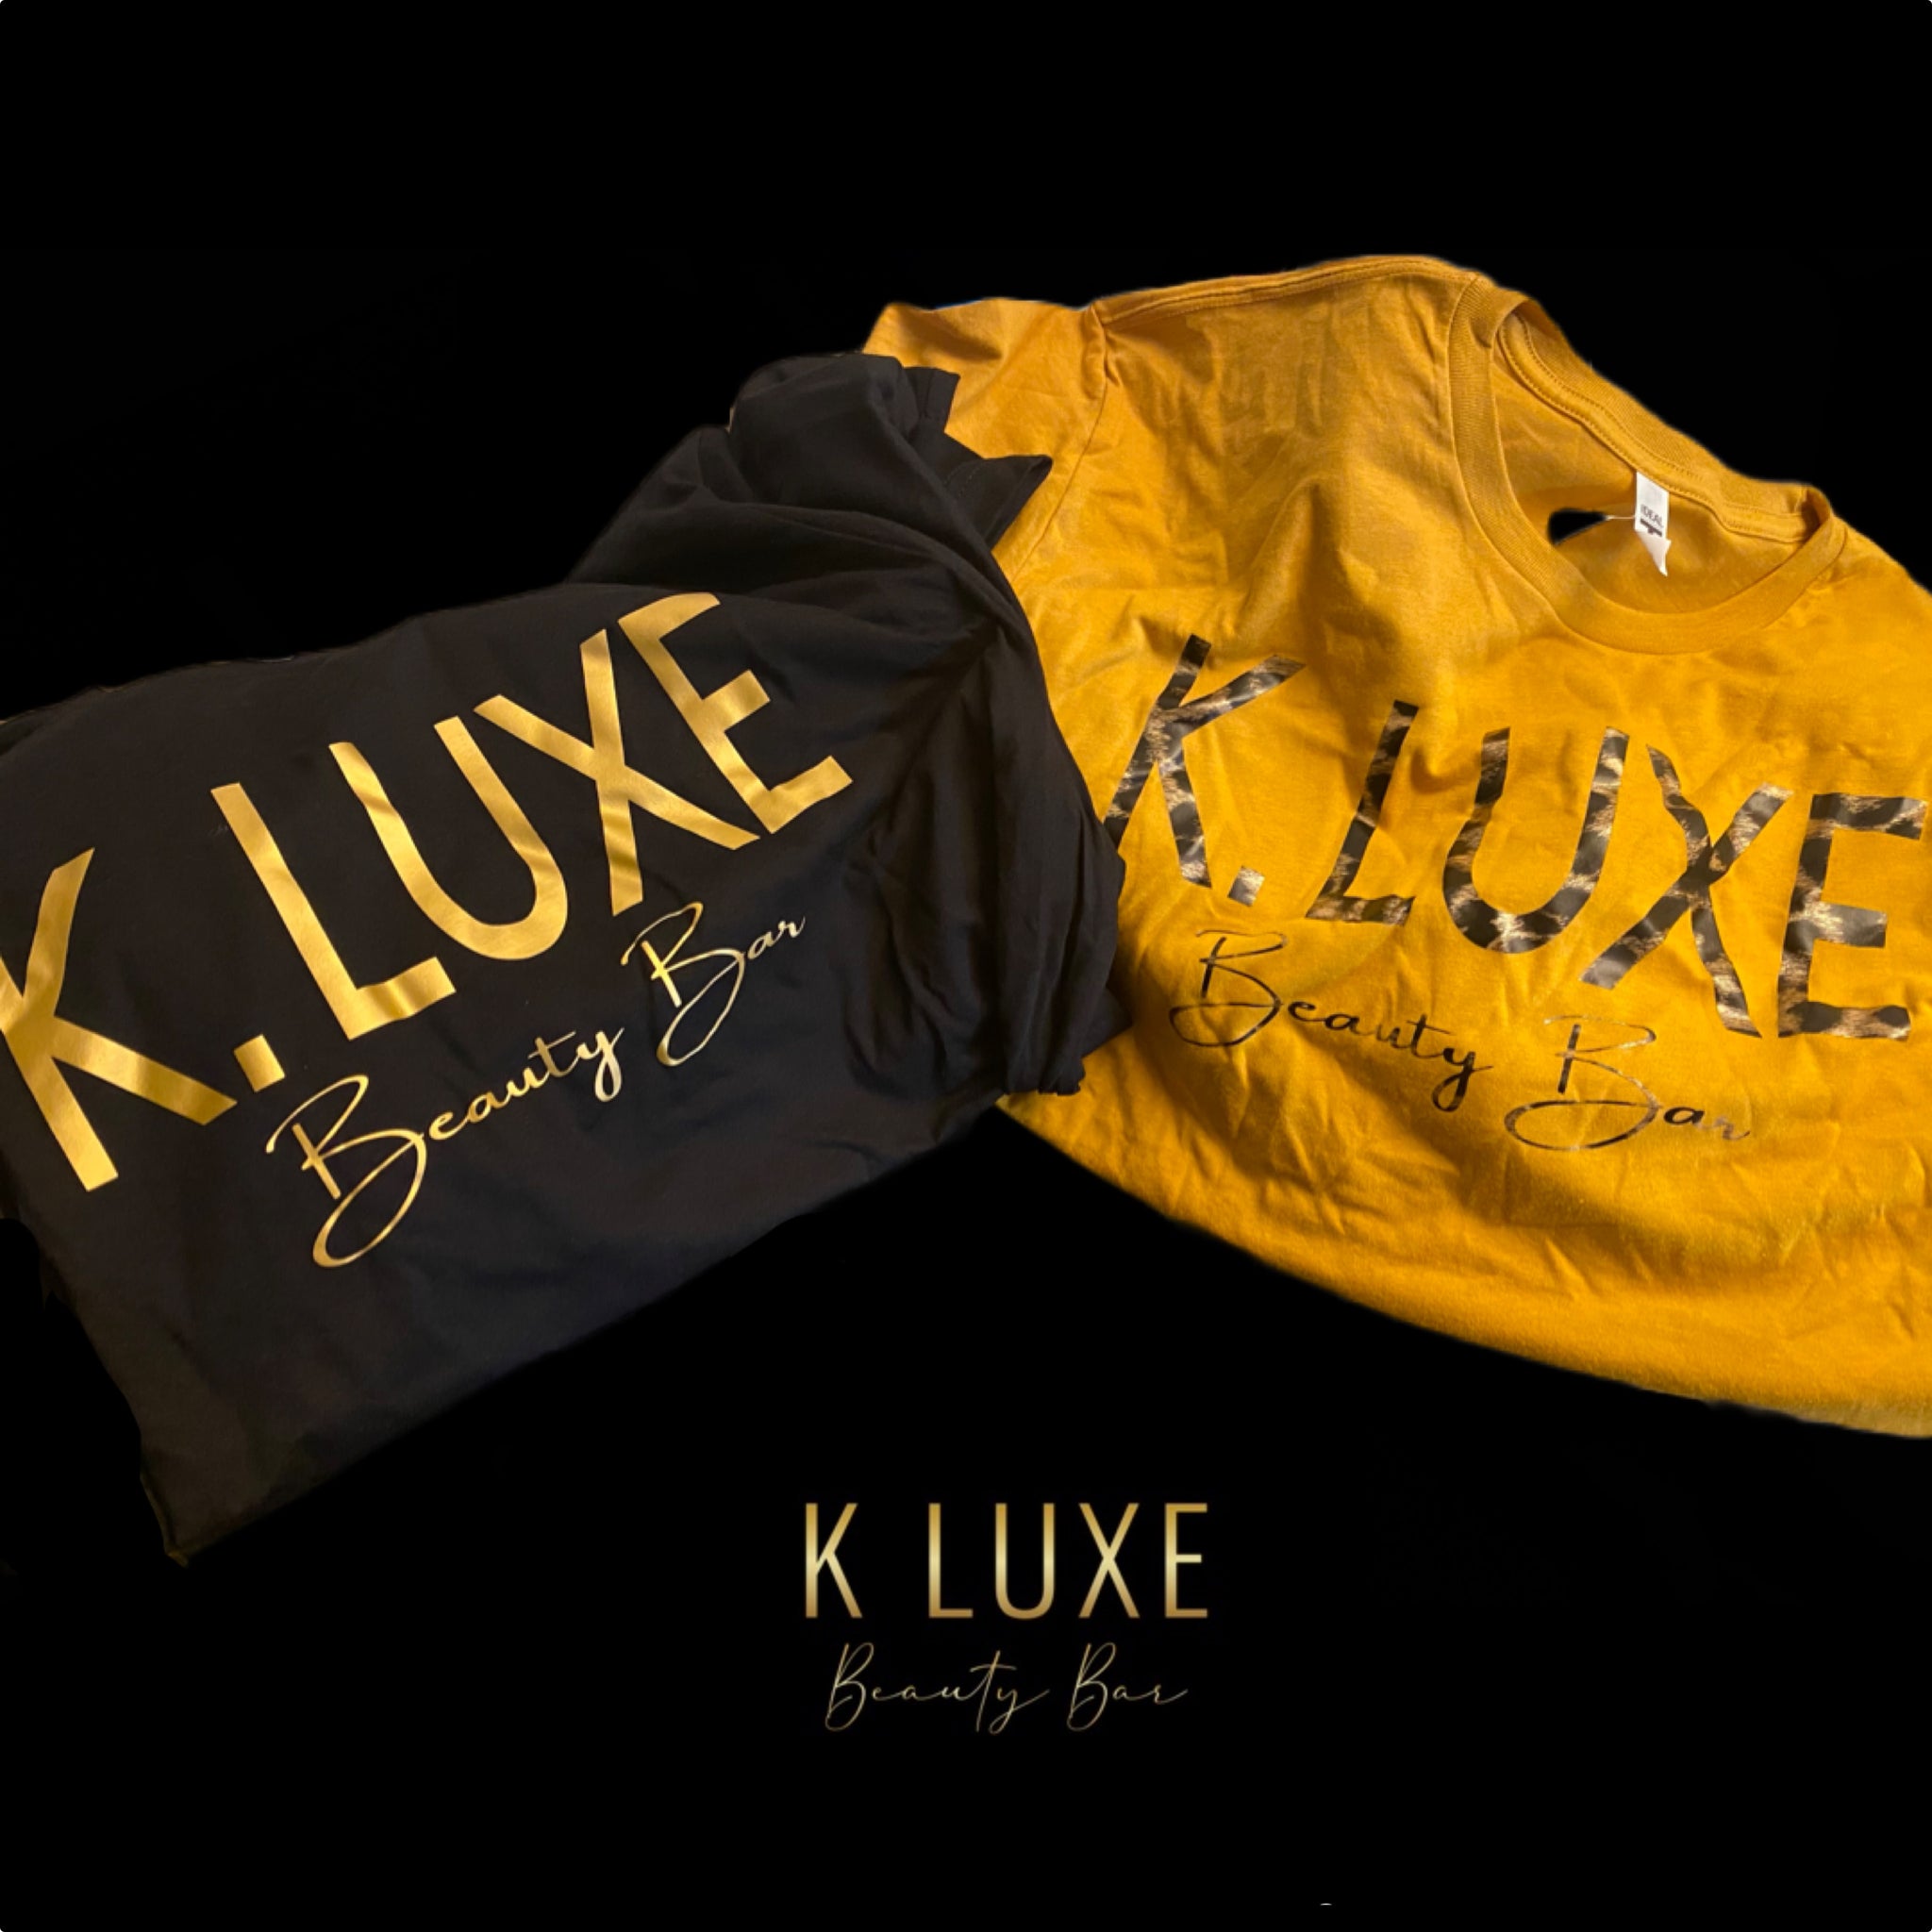 K Luxe Black T-shirt